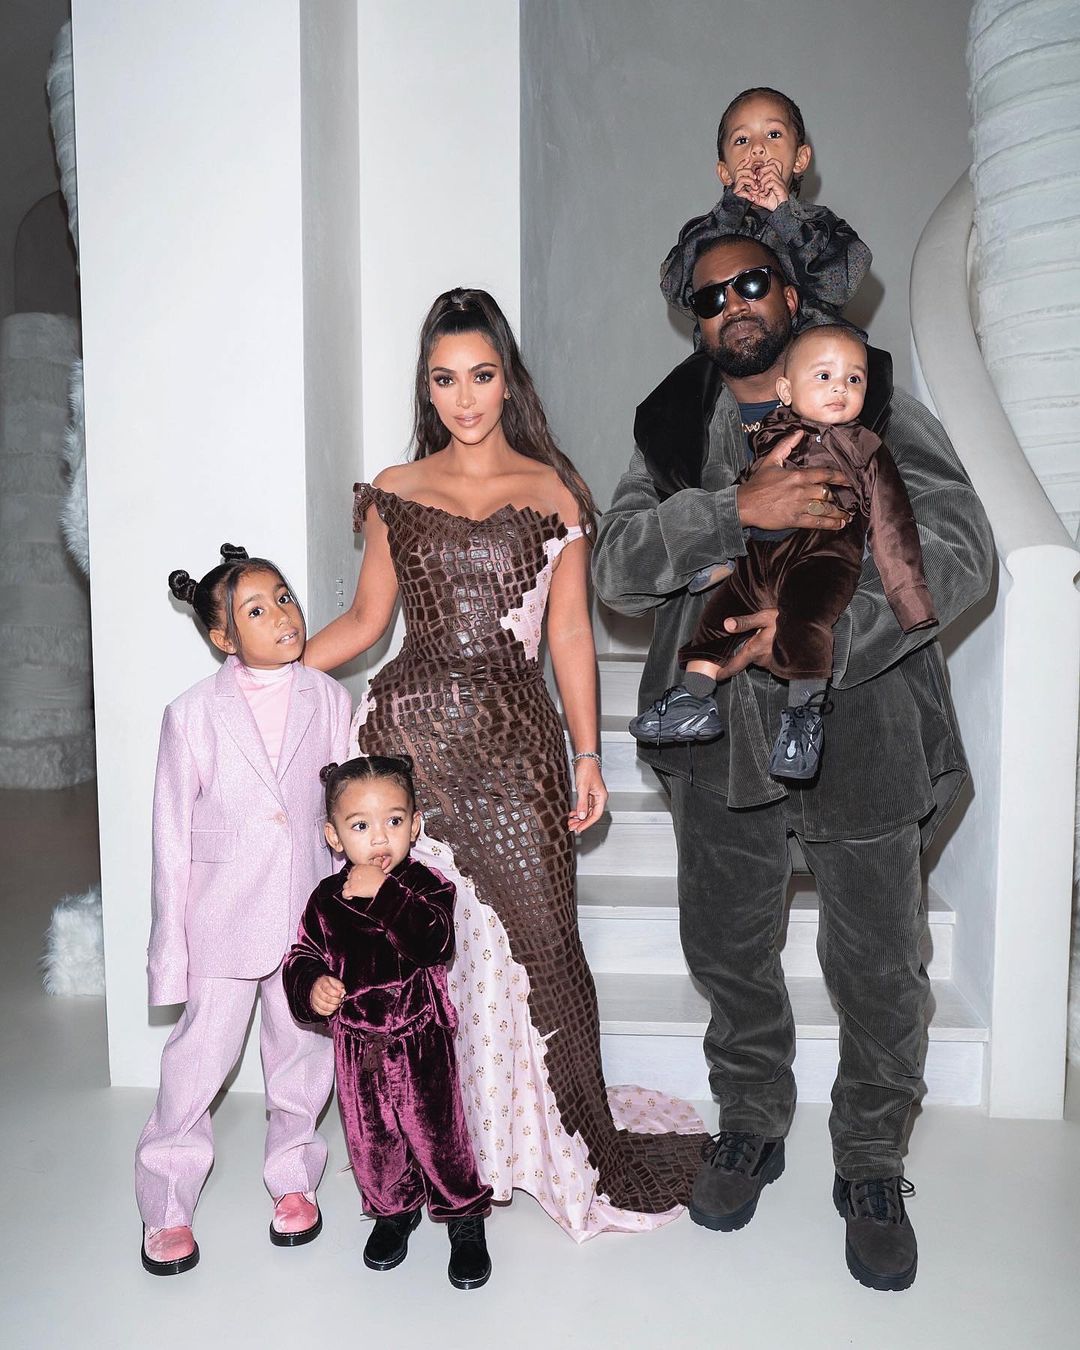 Kim and Kanye share children North, Saint, Chicago, and Psalm